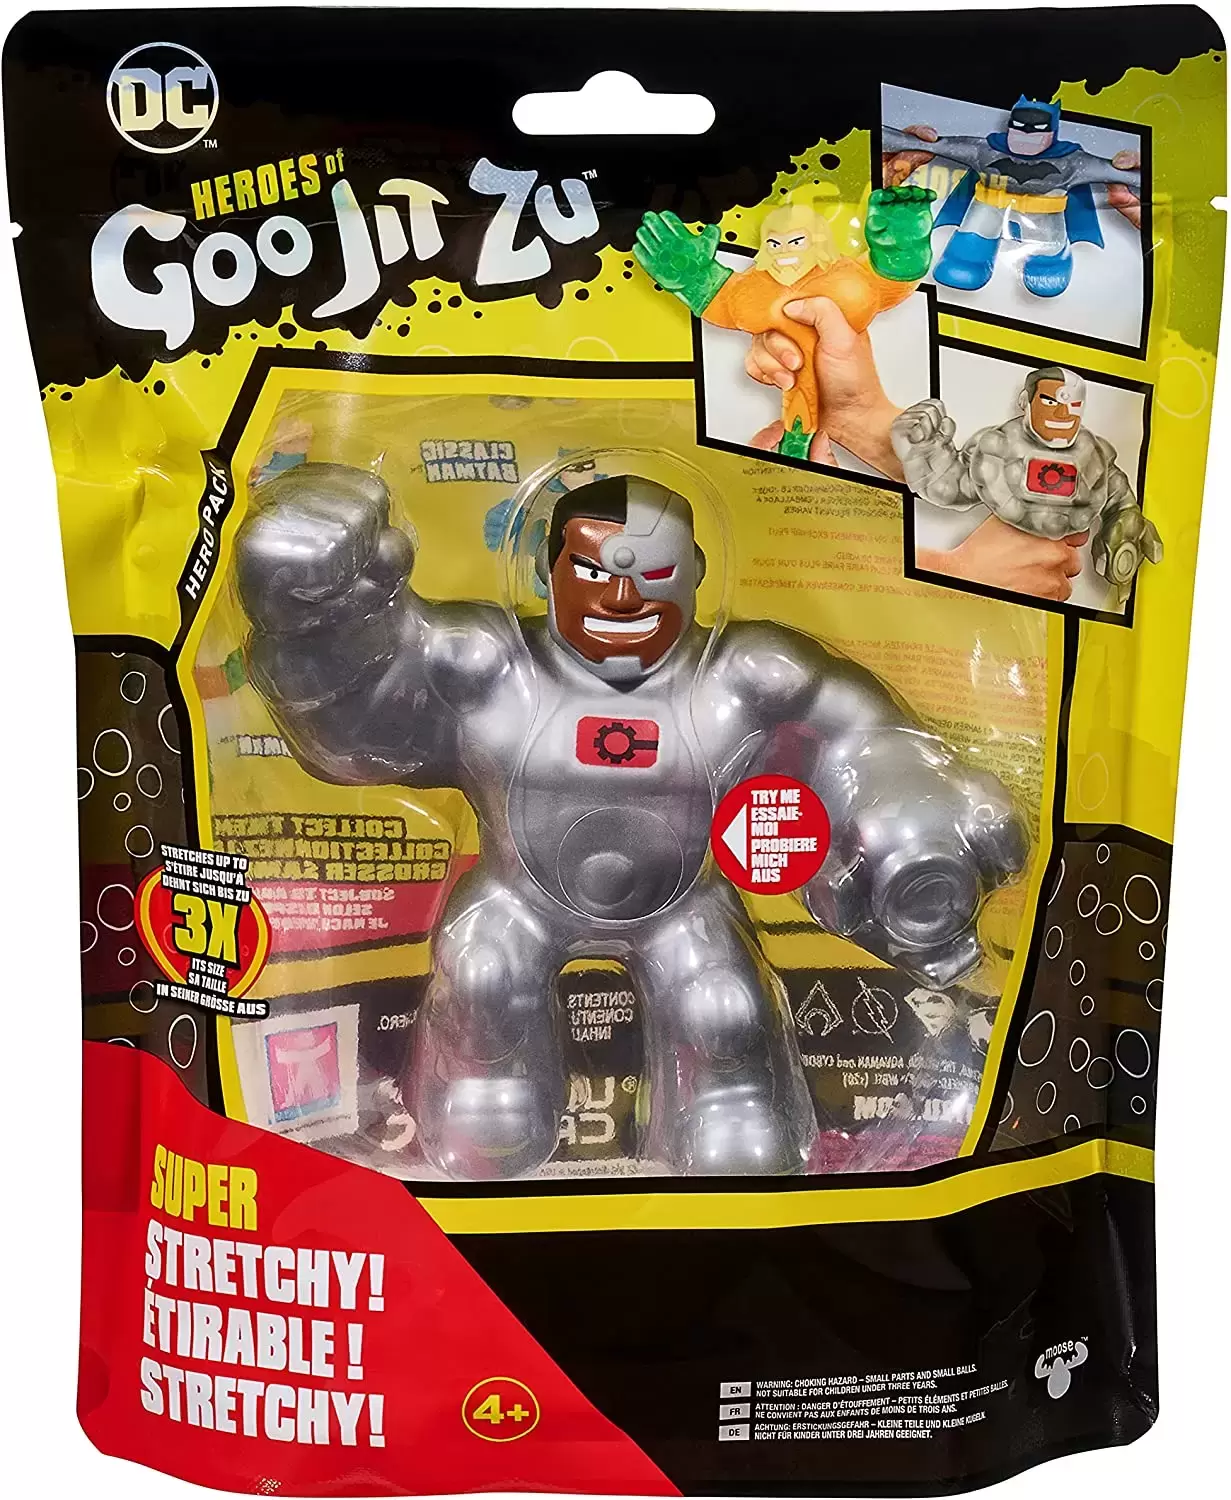 https://www.coleka.com/media/item/202110/11/goo-jit-zu-figurine-goo-jit-zu-dc-comics-cyborg-11-cm.webp